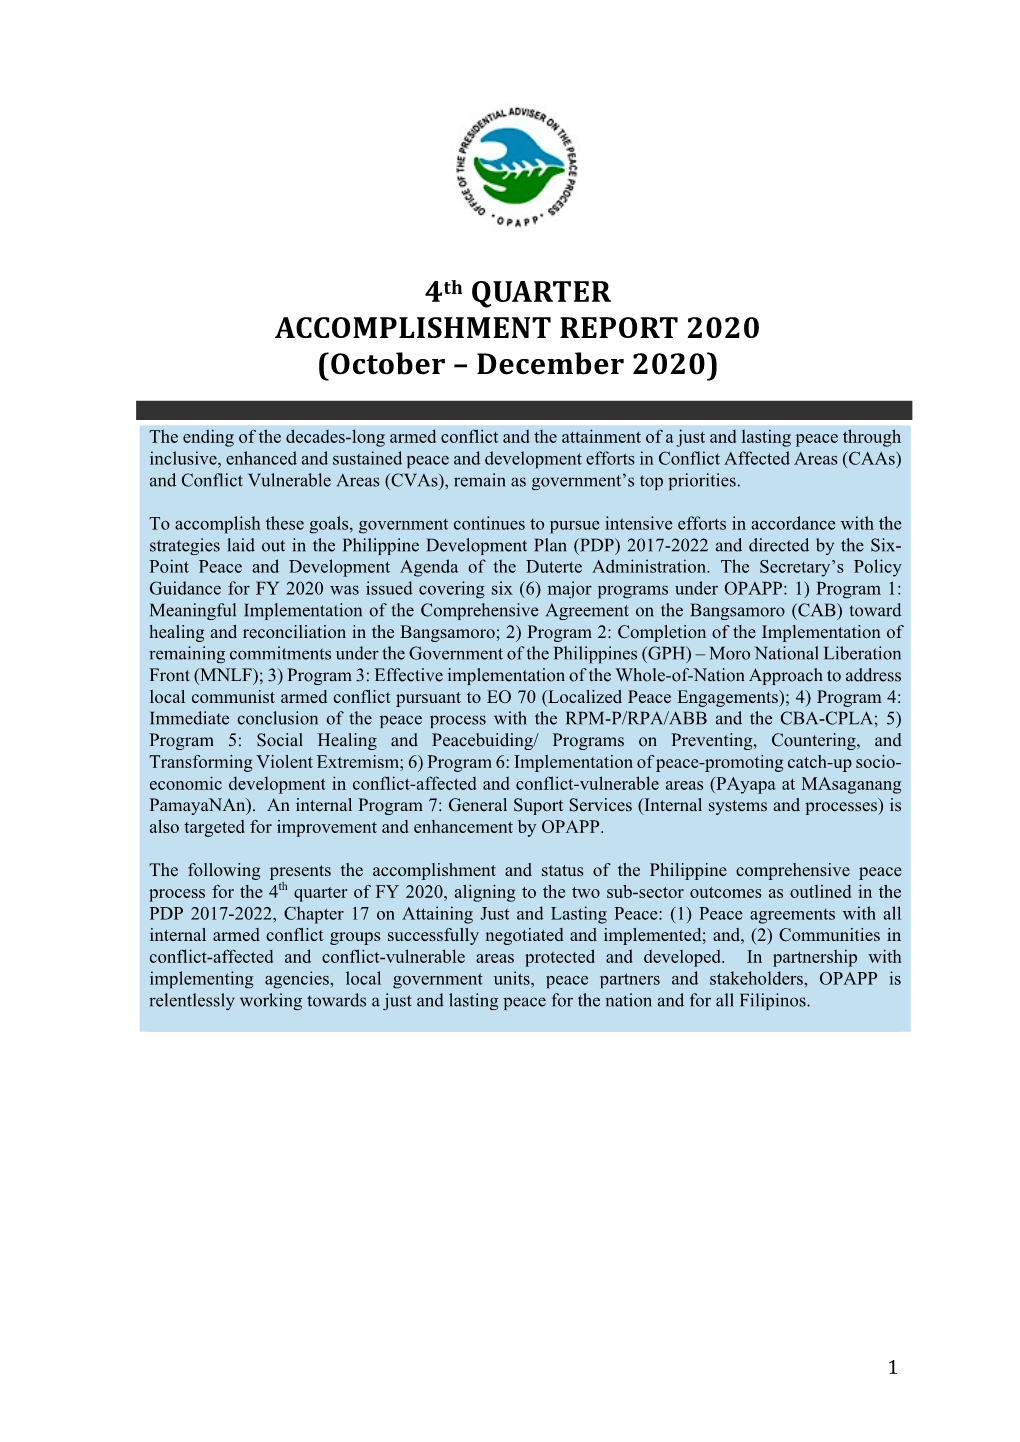 OPAPP 4Th Quarter Report Final 3.19.21